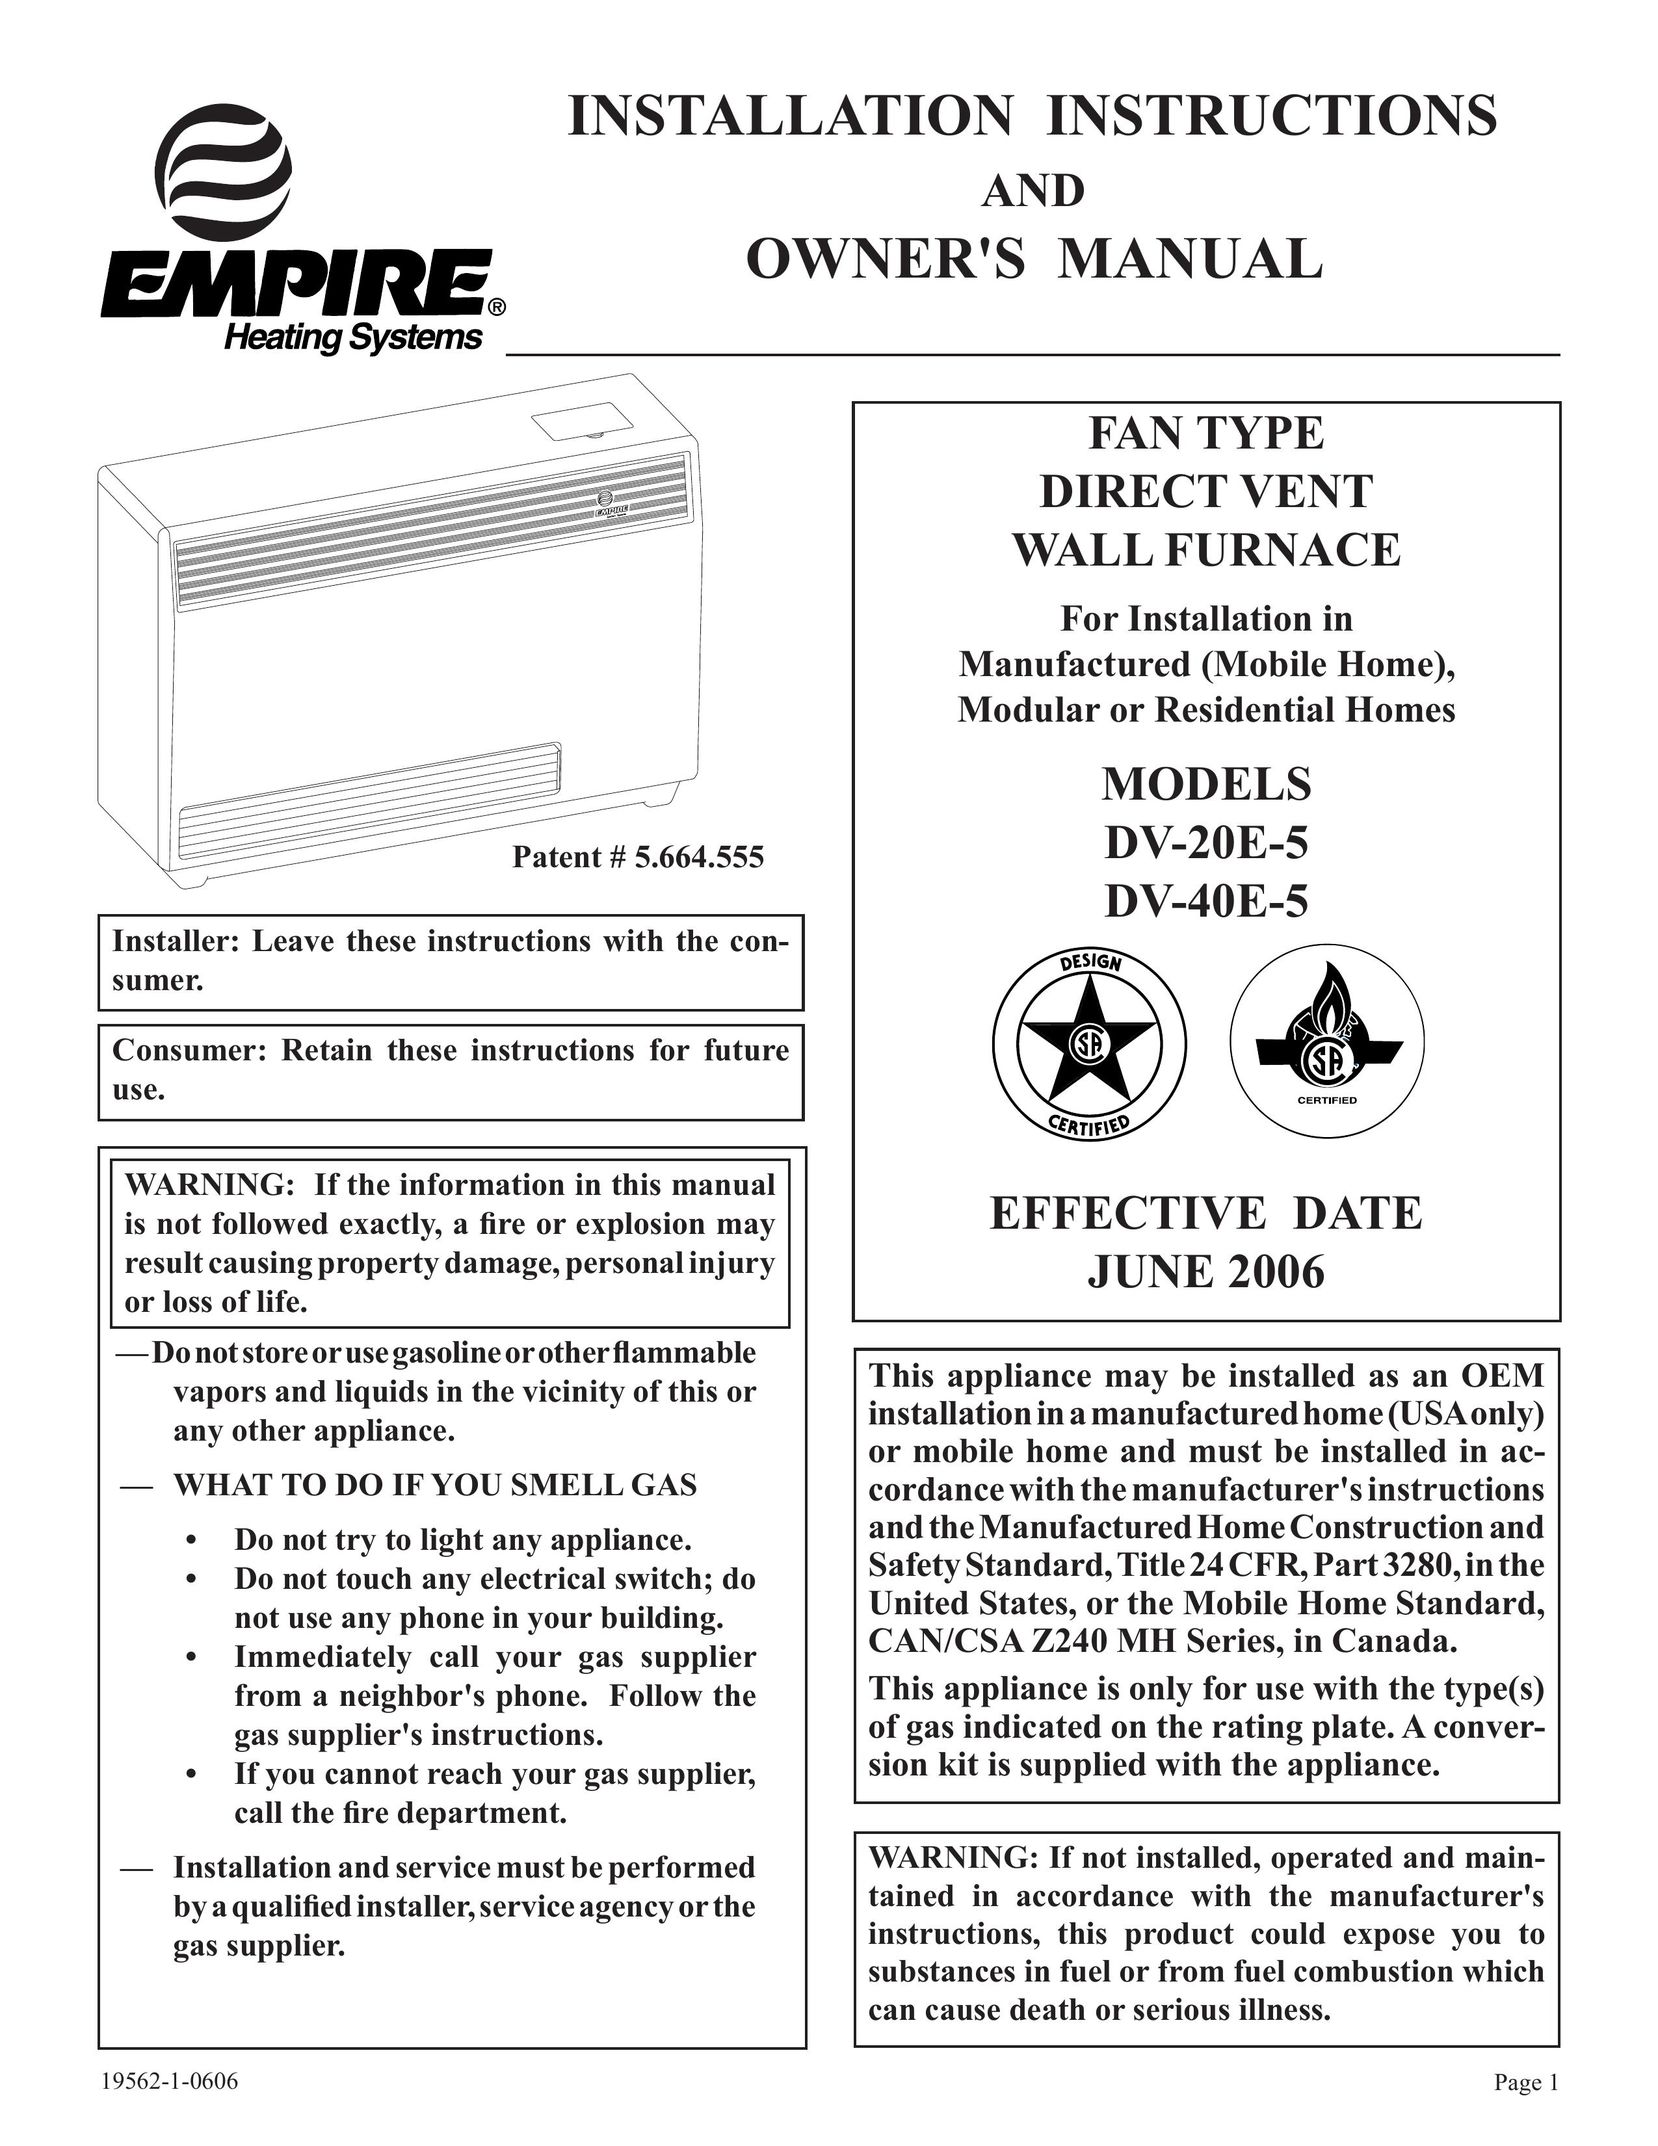 Langley/Empire DV-20E-5 Furnace User Manual